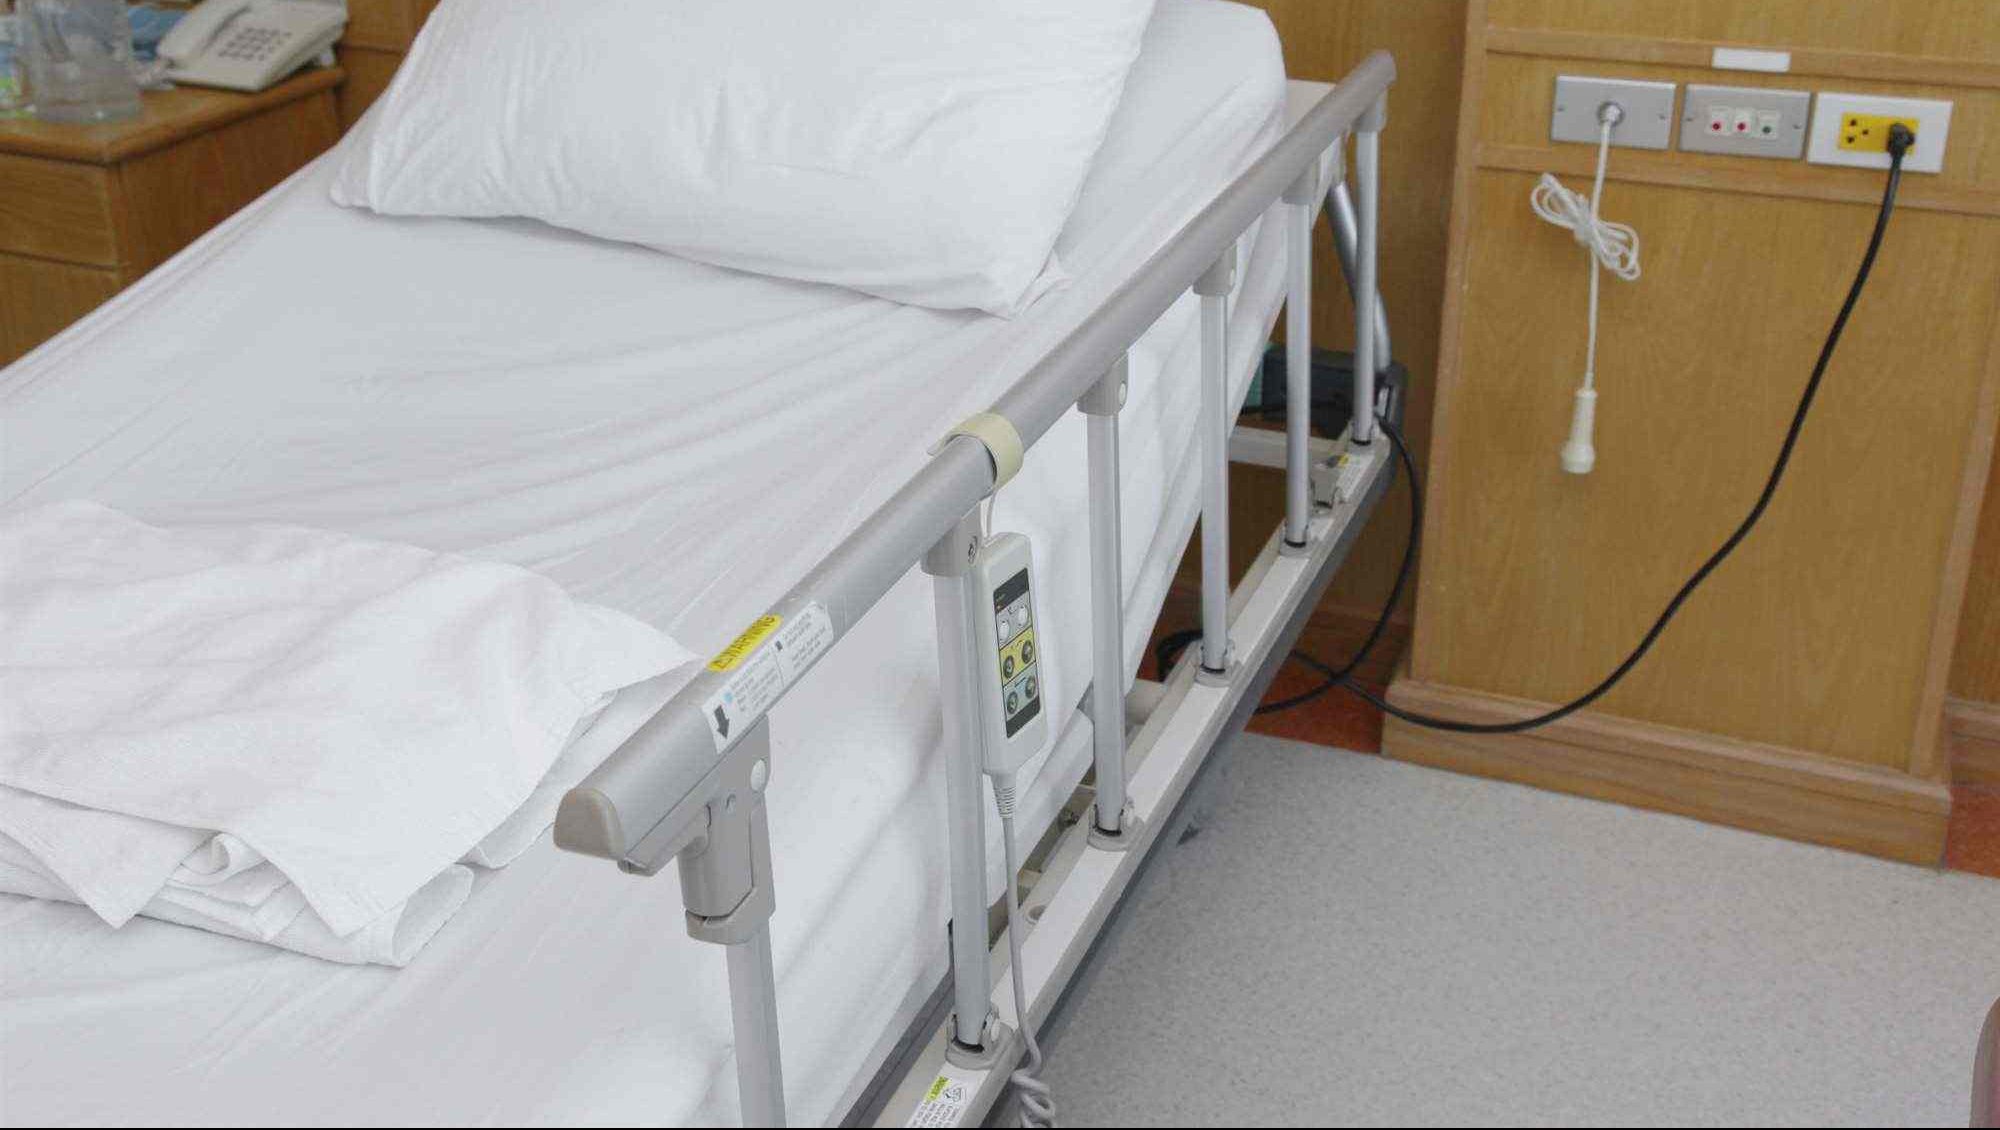 Hospital Bed for Home Rental